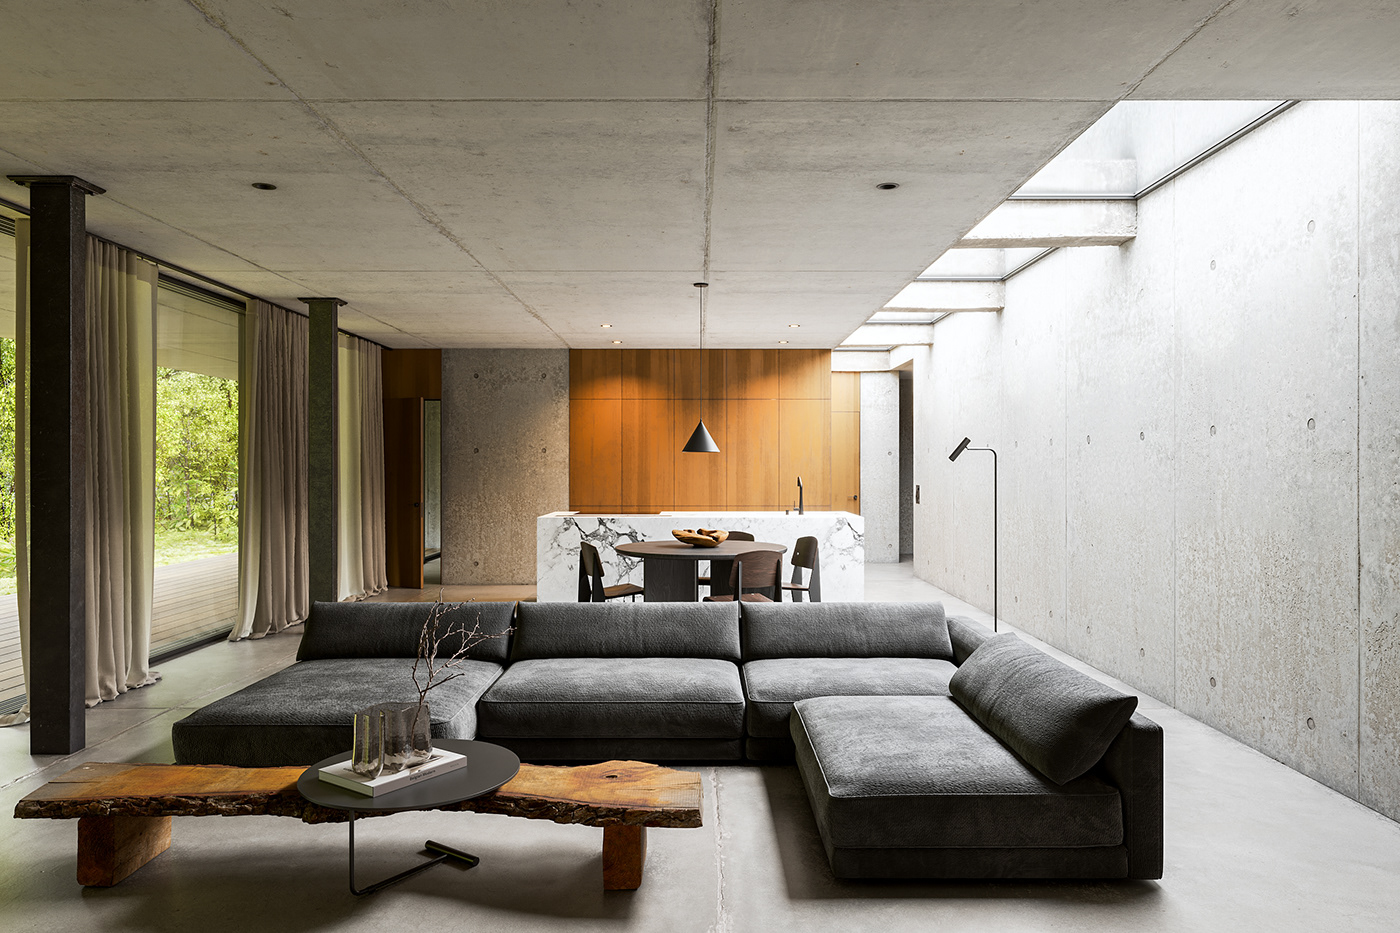 3D 3ds max architecture CGI design Interior forest living room Render visualization